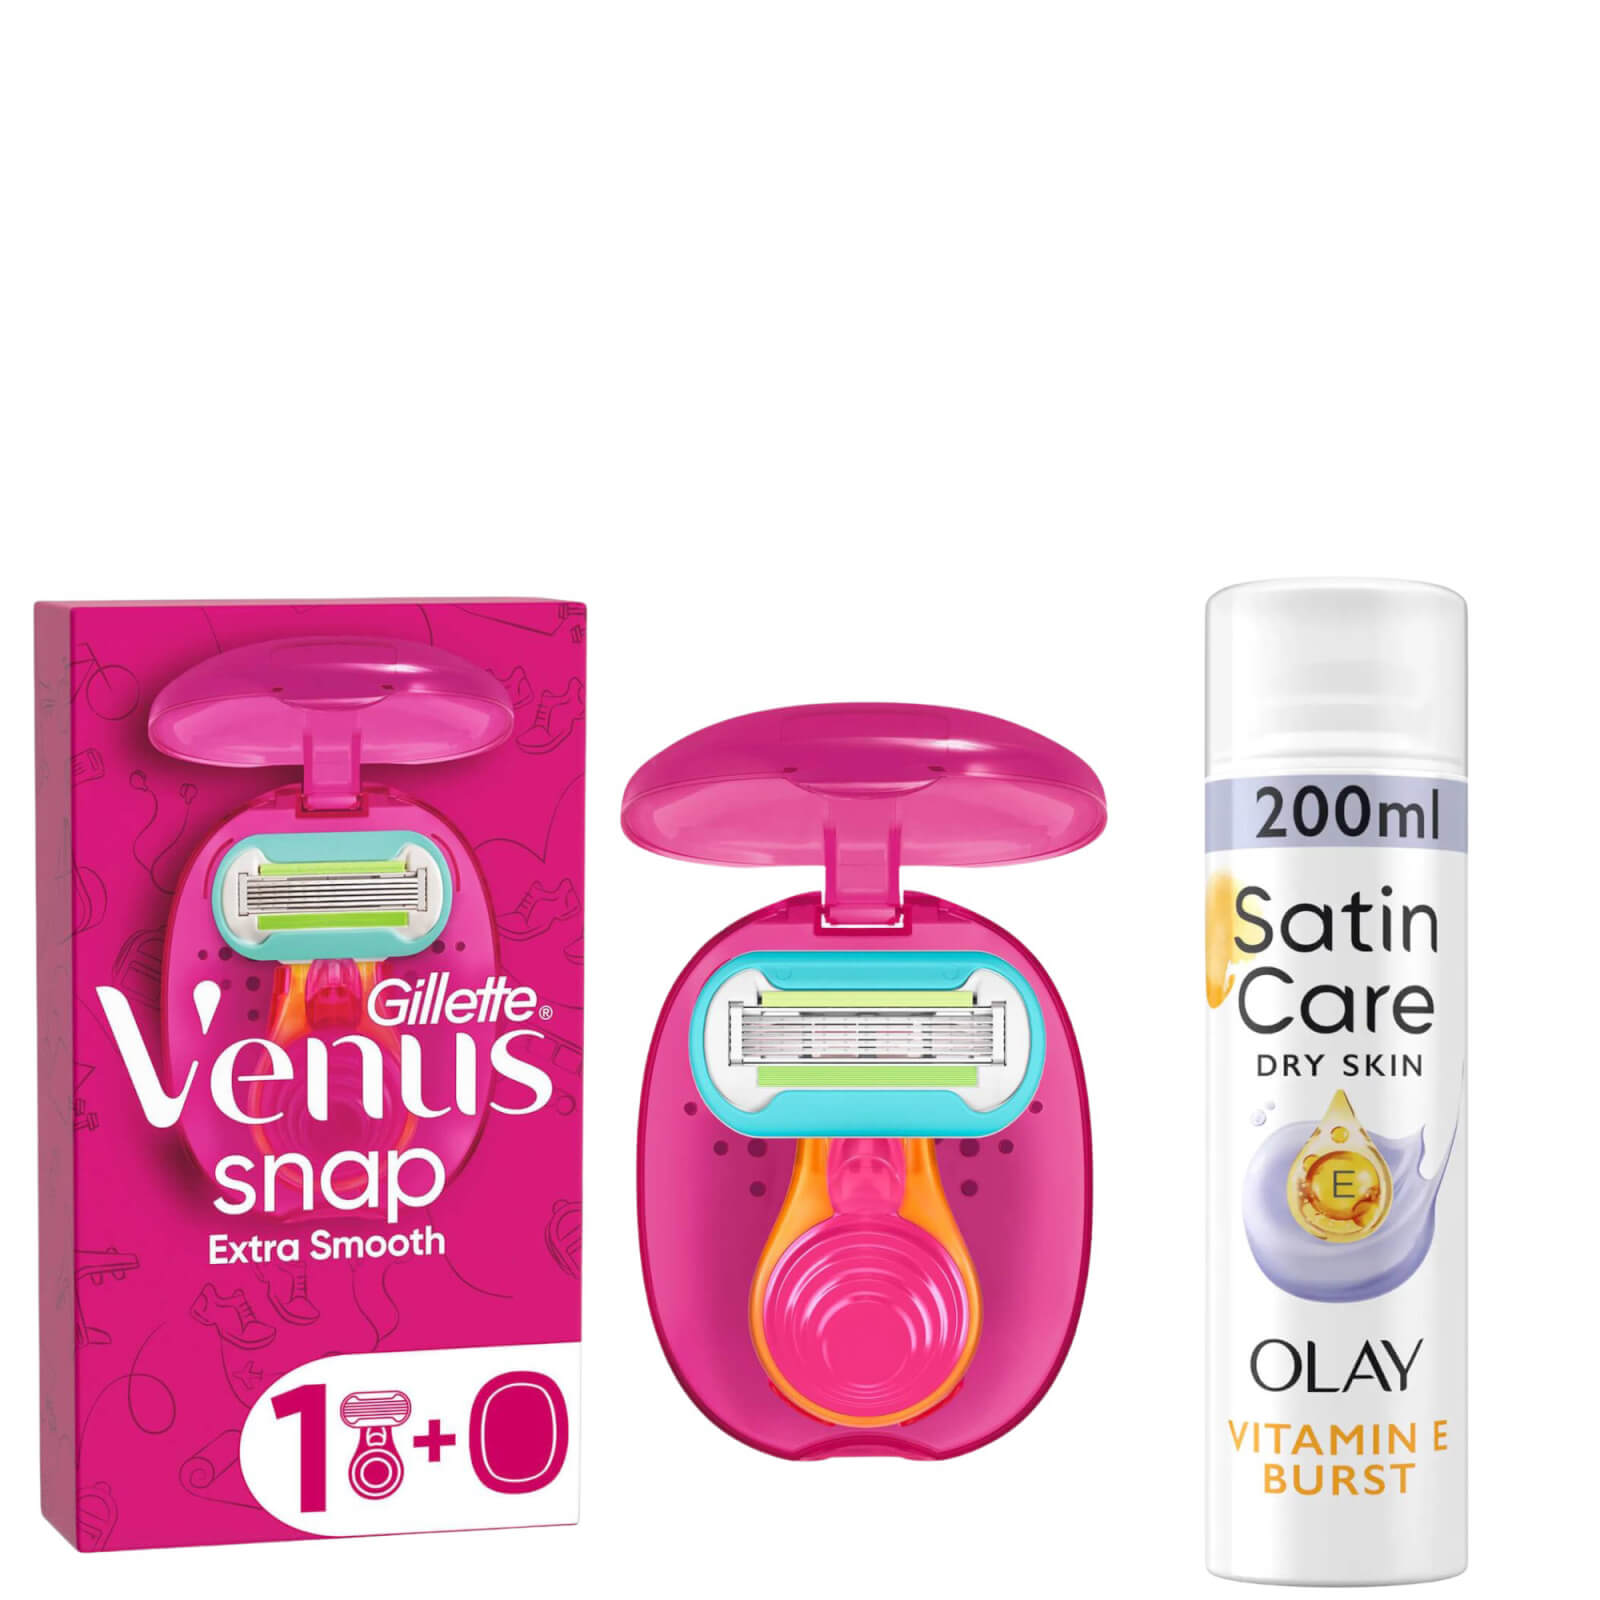 Venus Extra Smooth SNAP Razor + Blades - Handle with Satin Care Olay shave prep